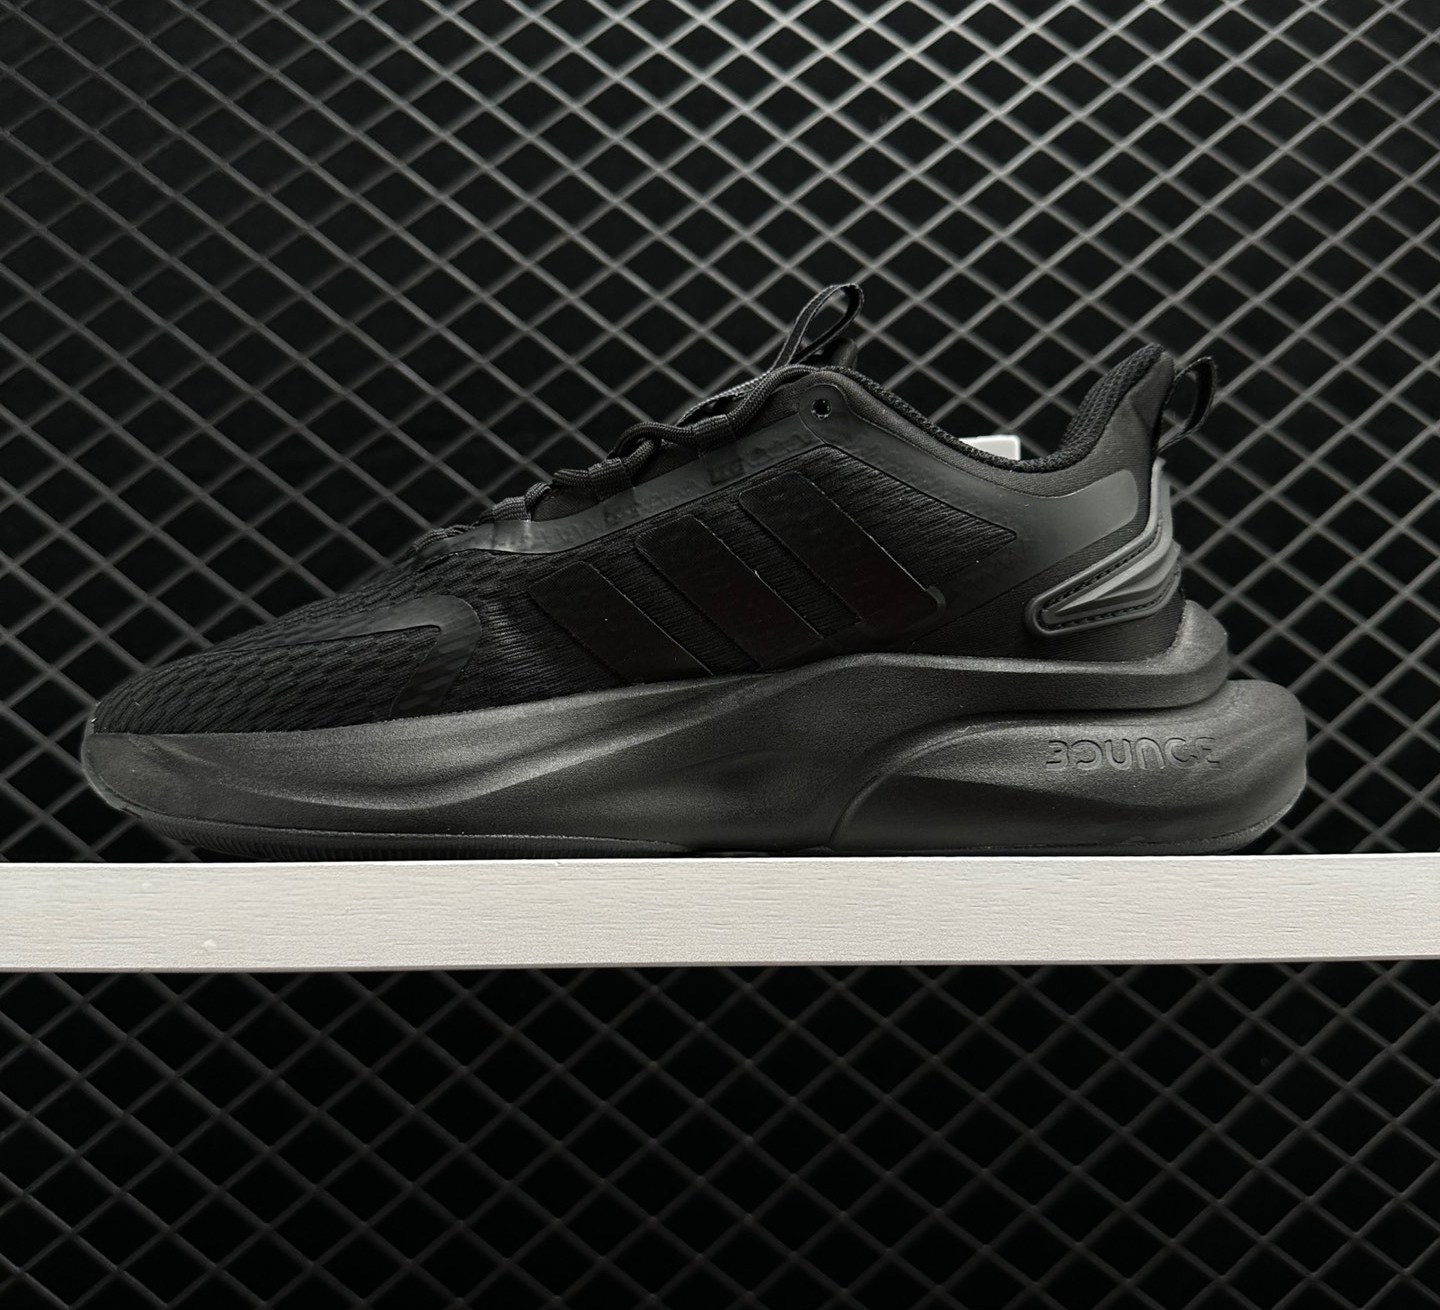 Adidas Alphabounce Plus Black Carbon - Premium Running Shoes